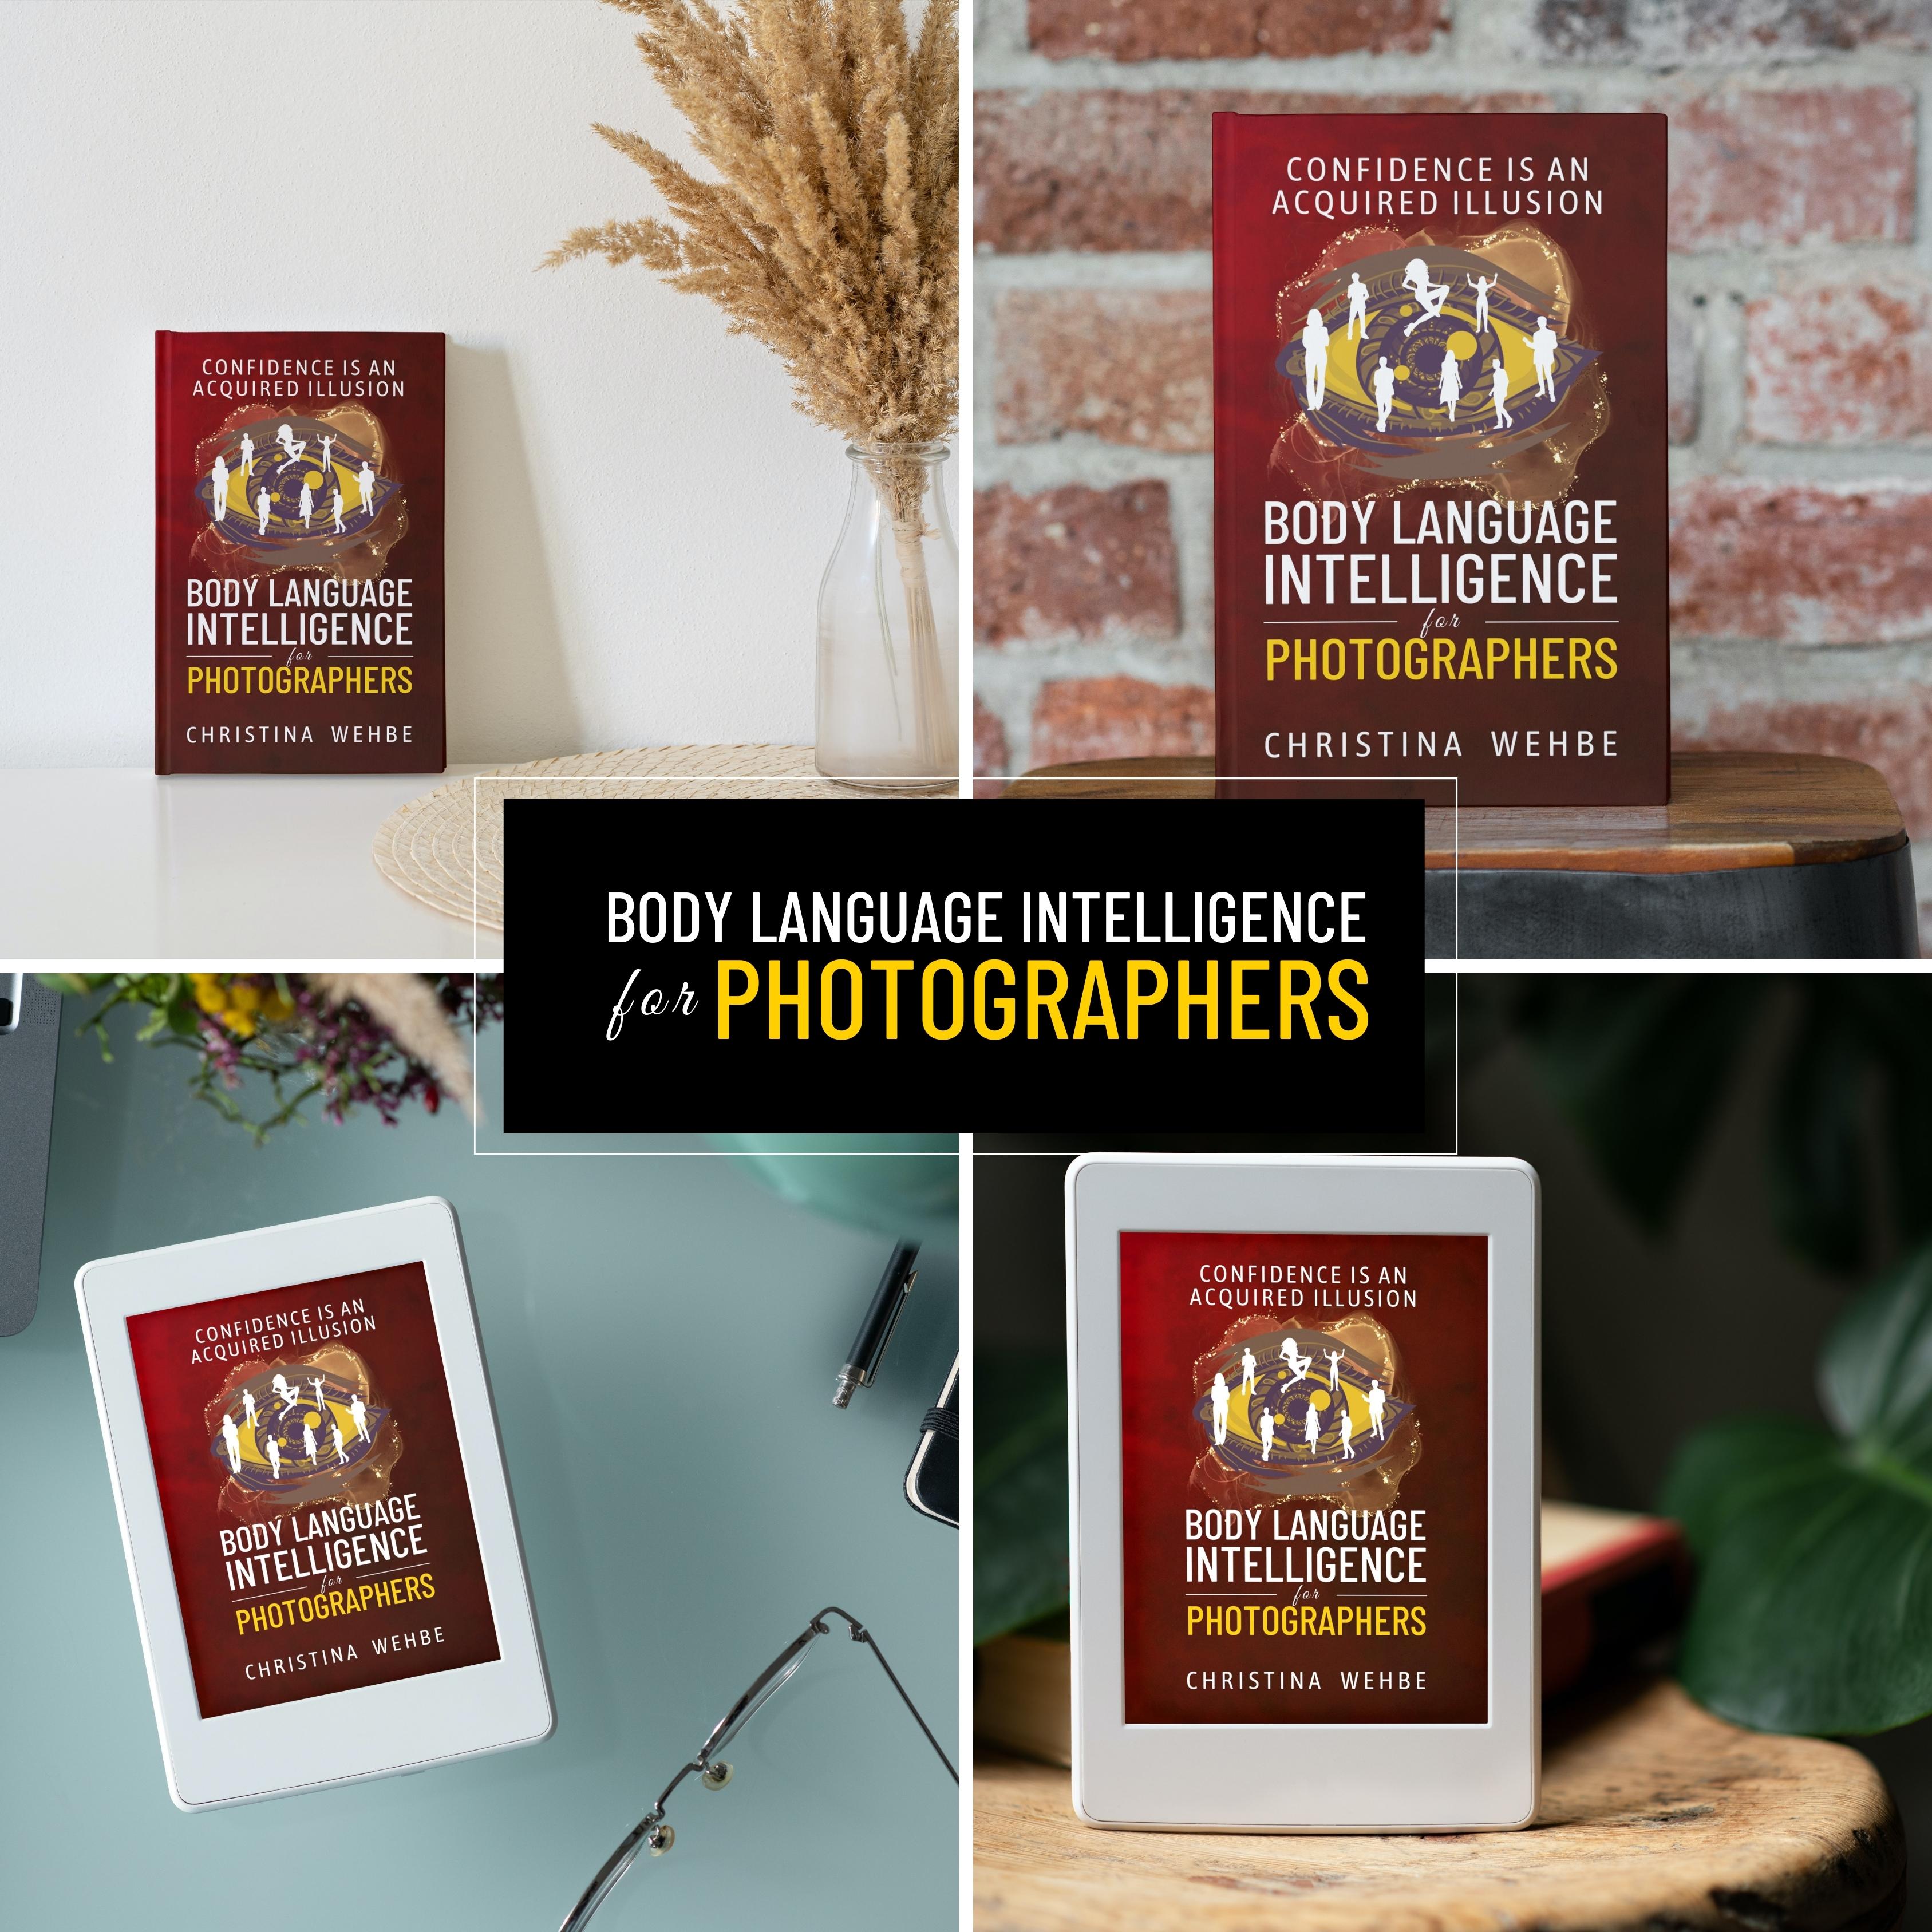 Photographer Christina Wehbe Publishes Book "Body Language Intelligence for Photographers" to Rave Reviews